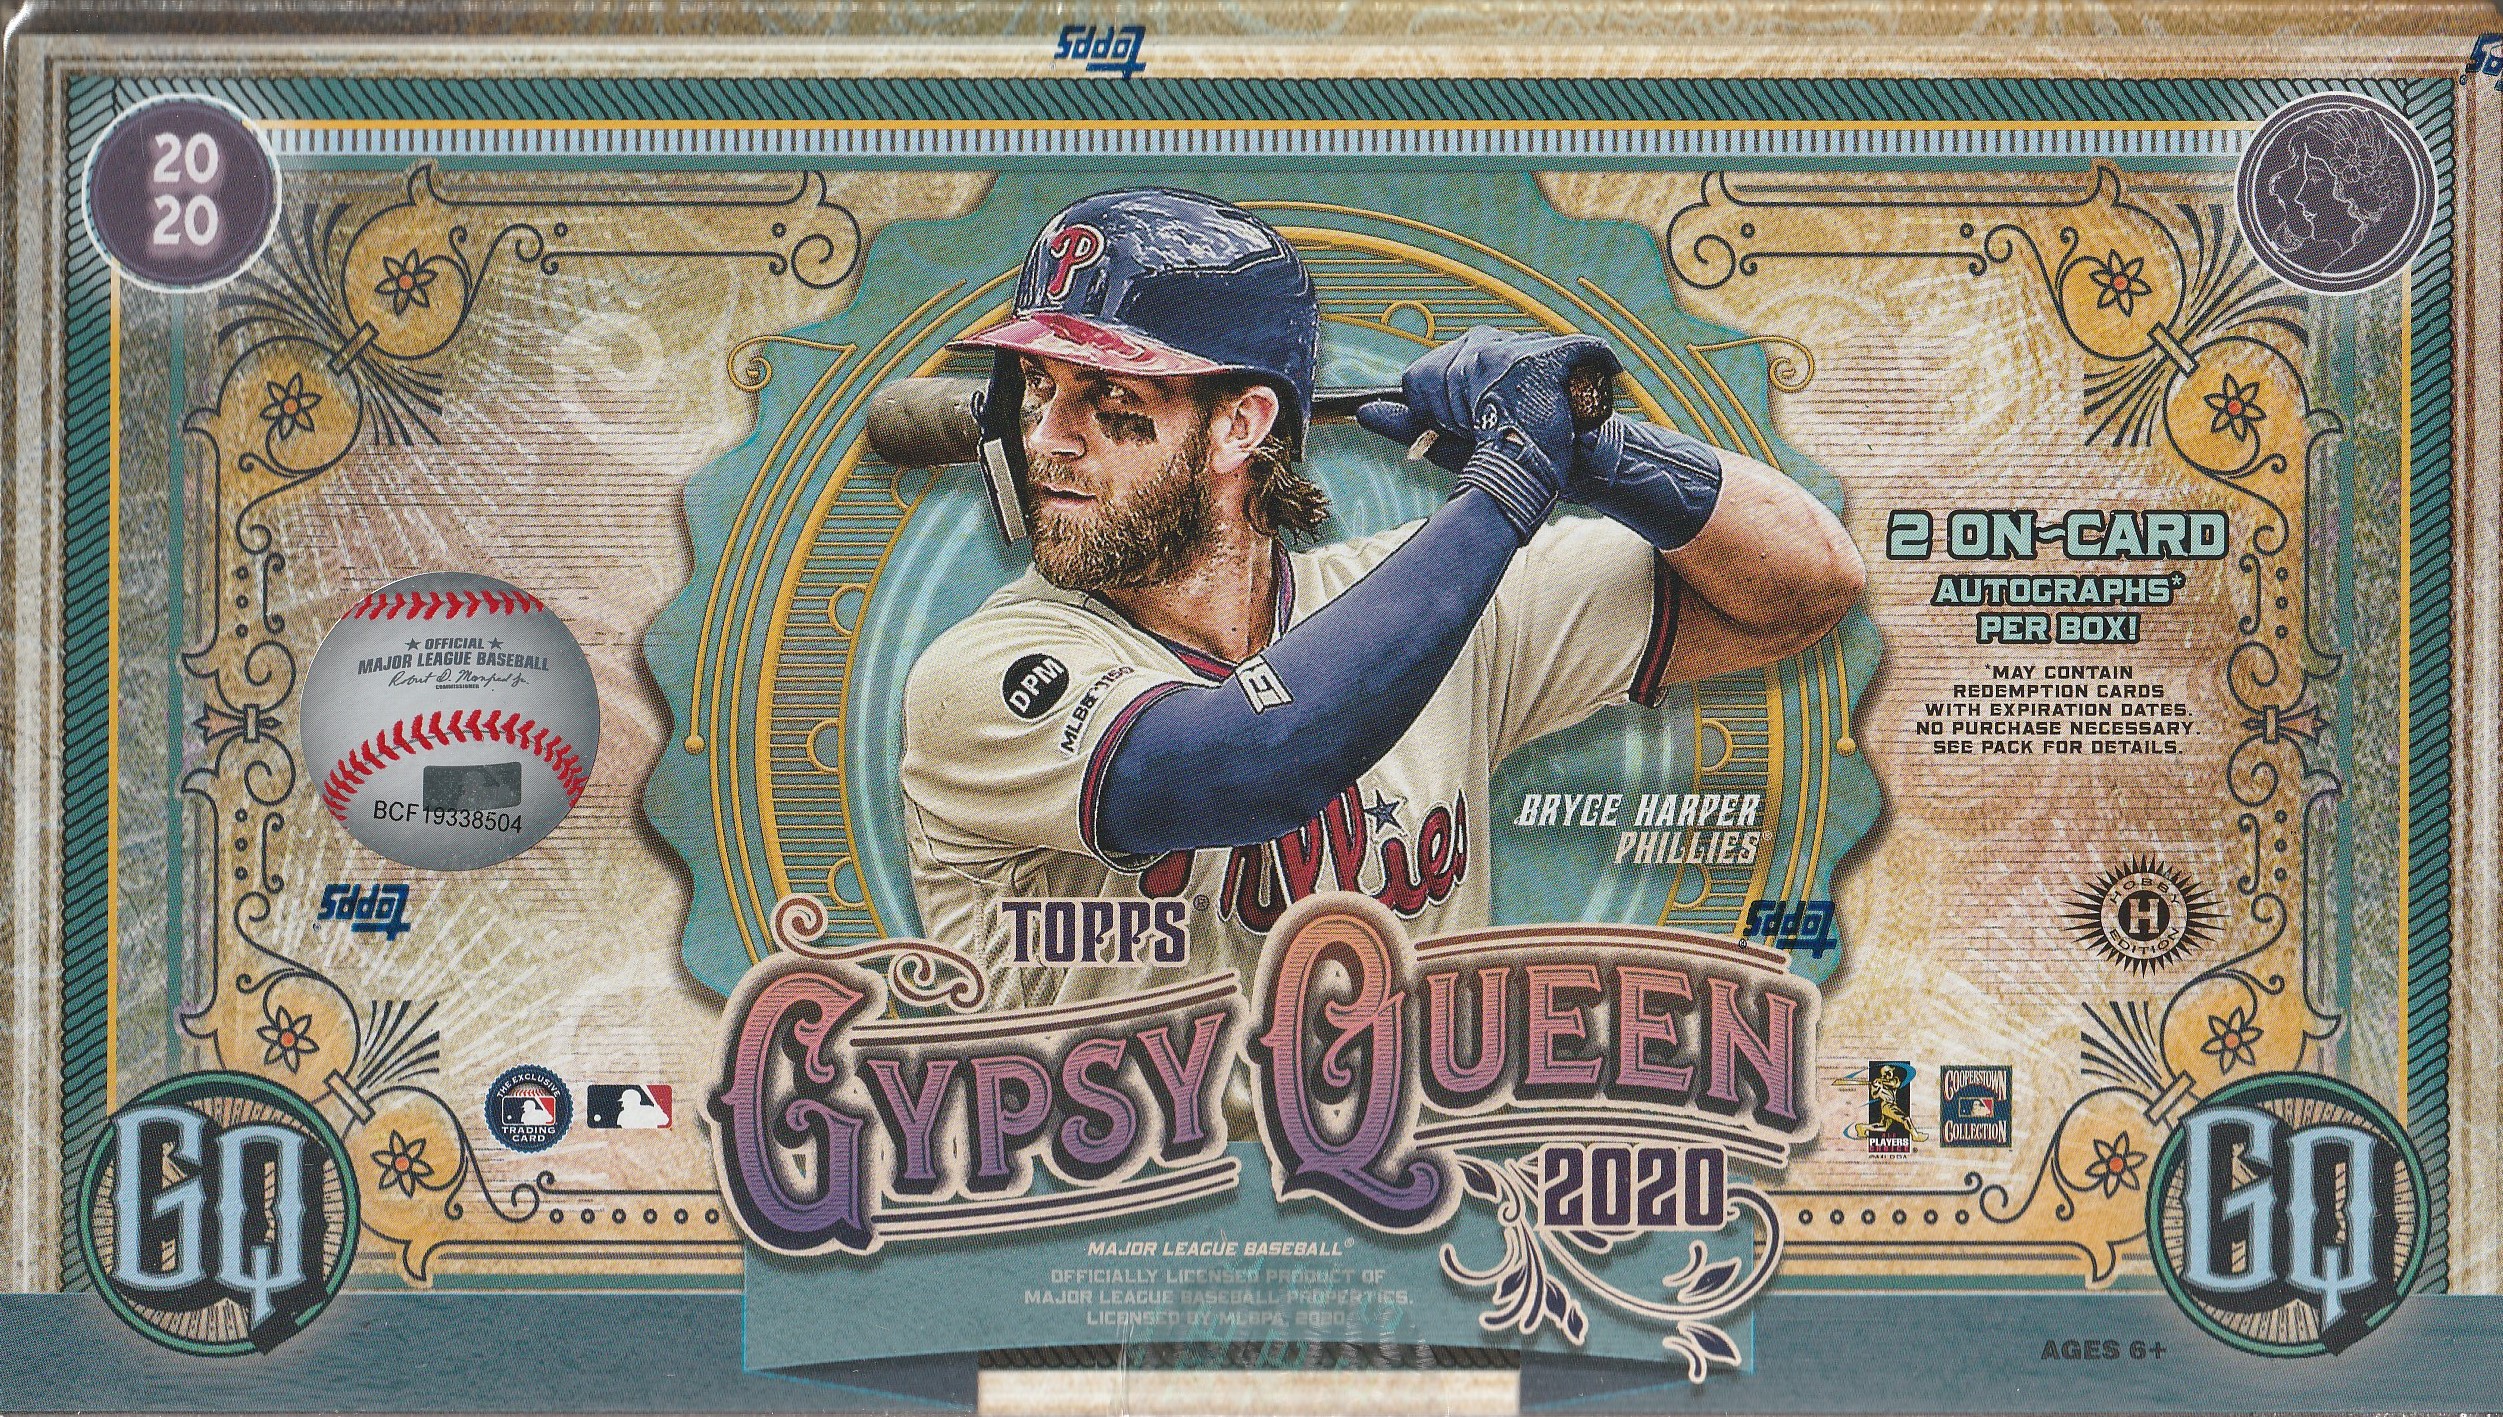 MLB 2020 TOPPS GYPSY QUEEN BASEBALL | Trading Card Journal